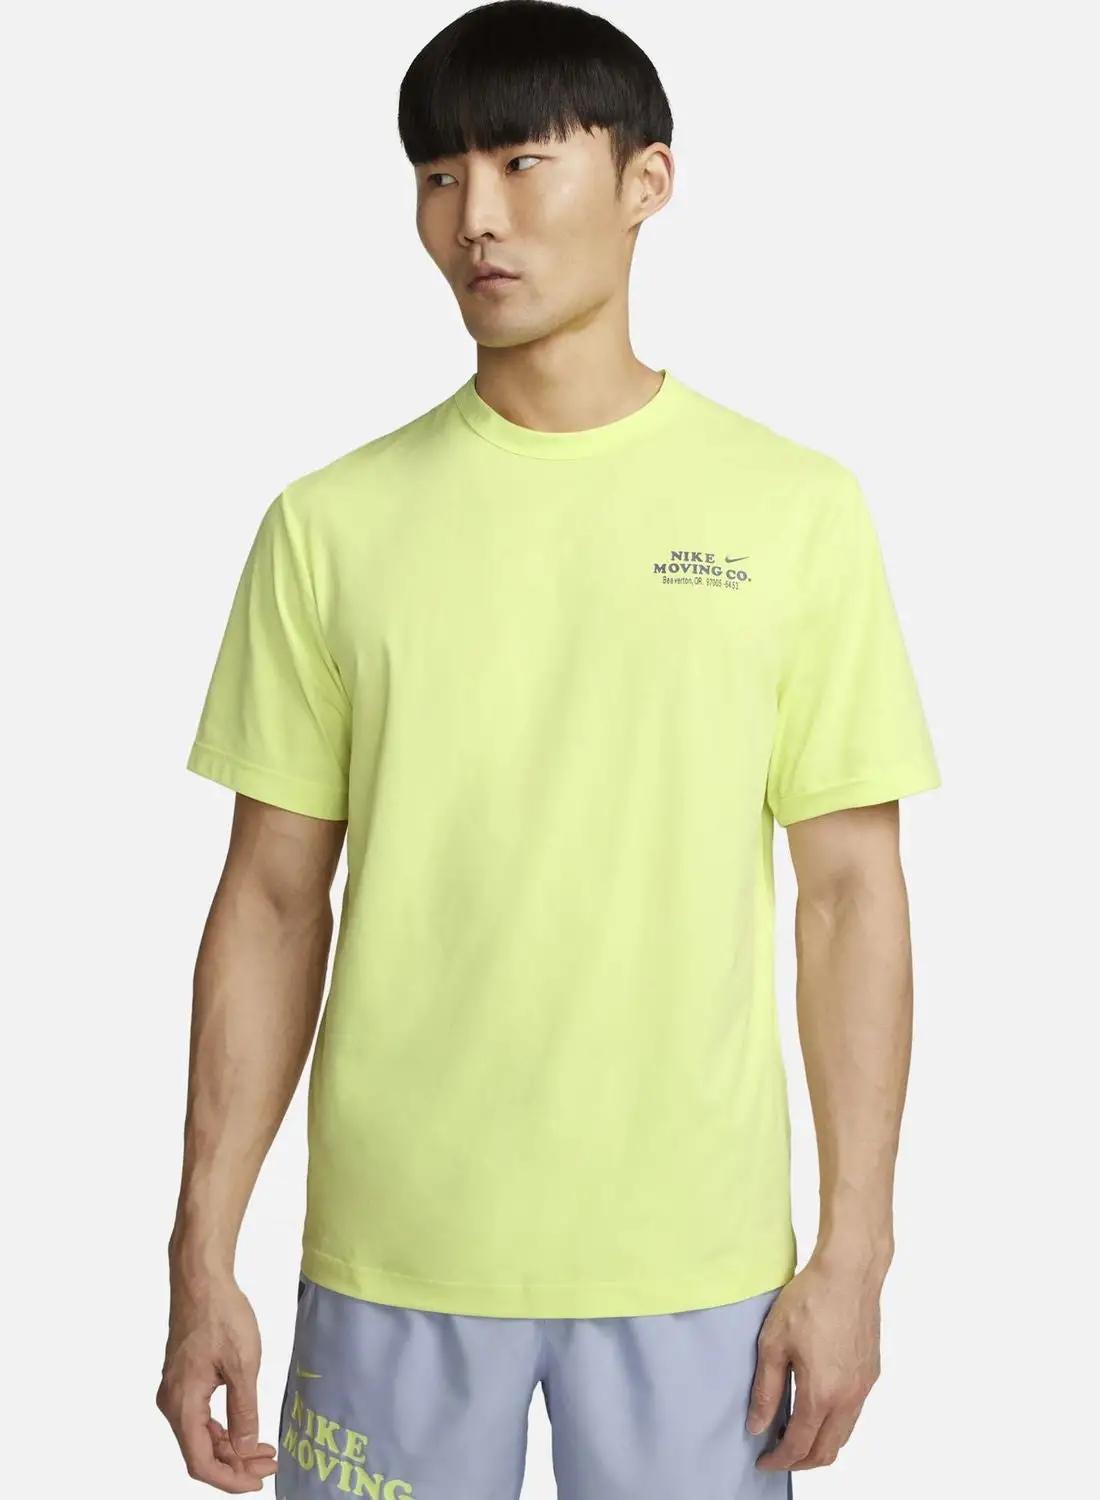 Nike Dri-Fit Hyverse Moving T-Shirt